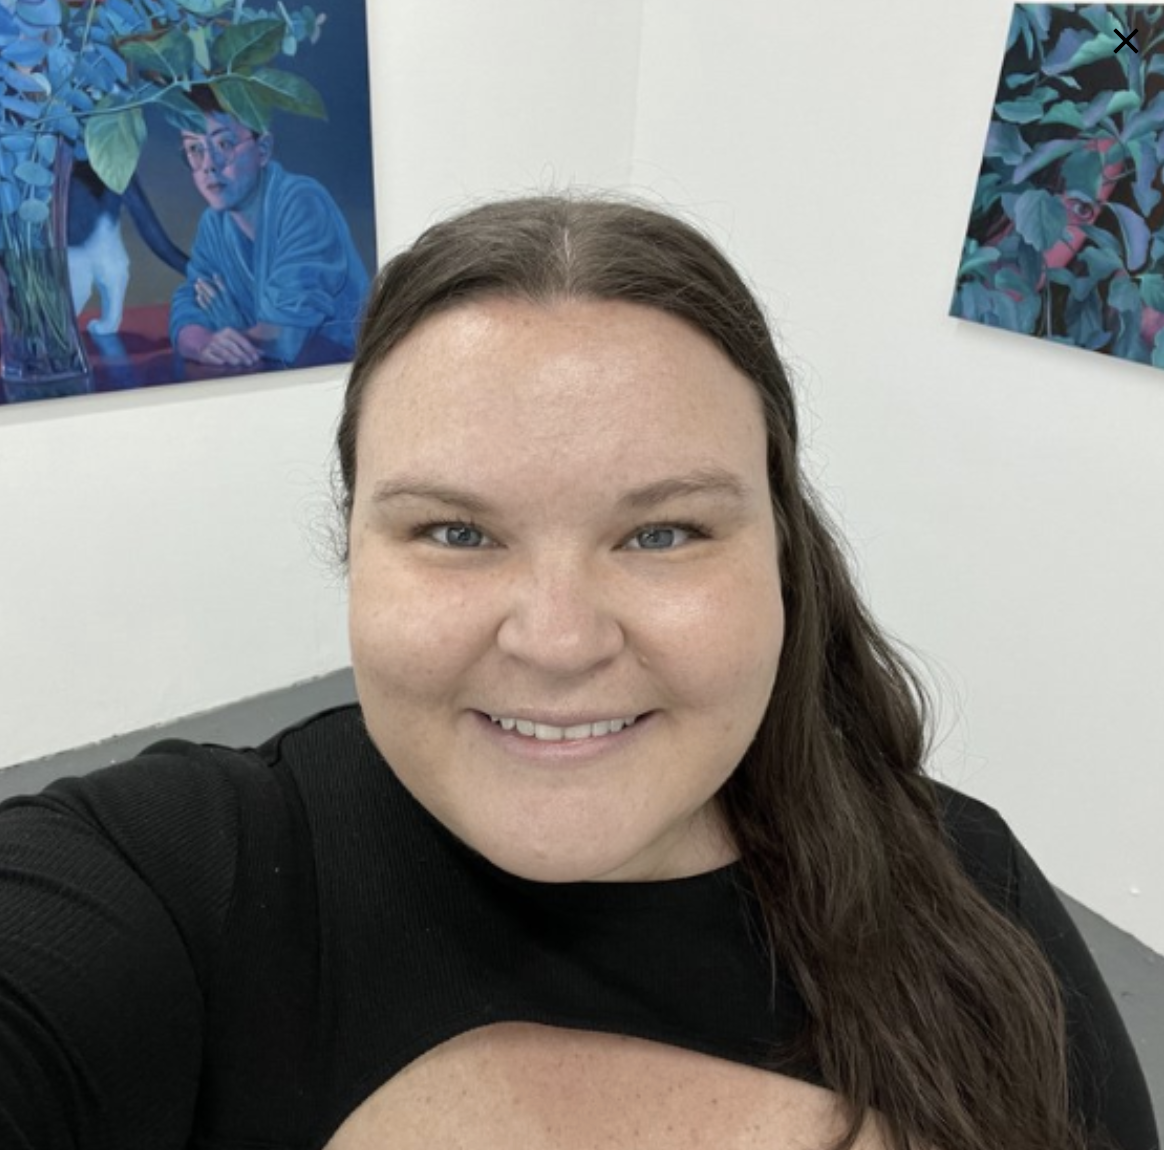 Deanna Evans - Gallery Owner / Curator